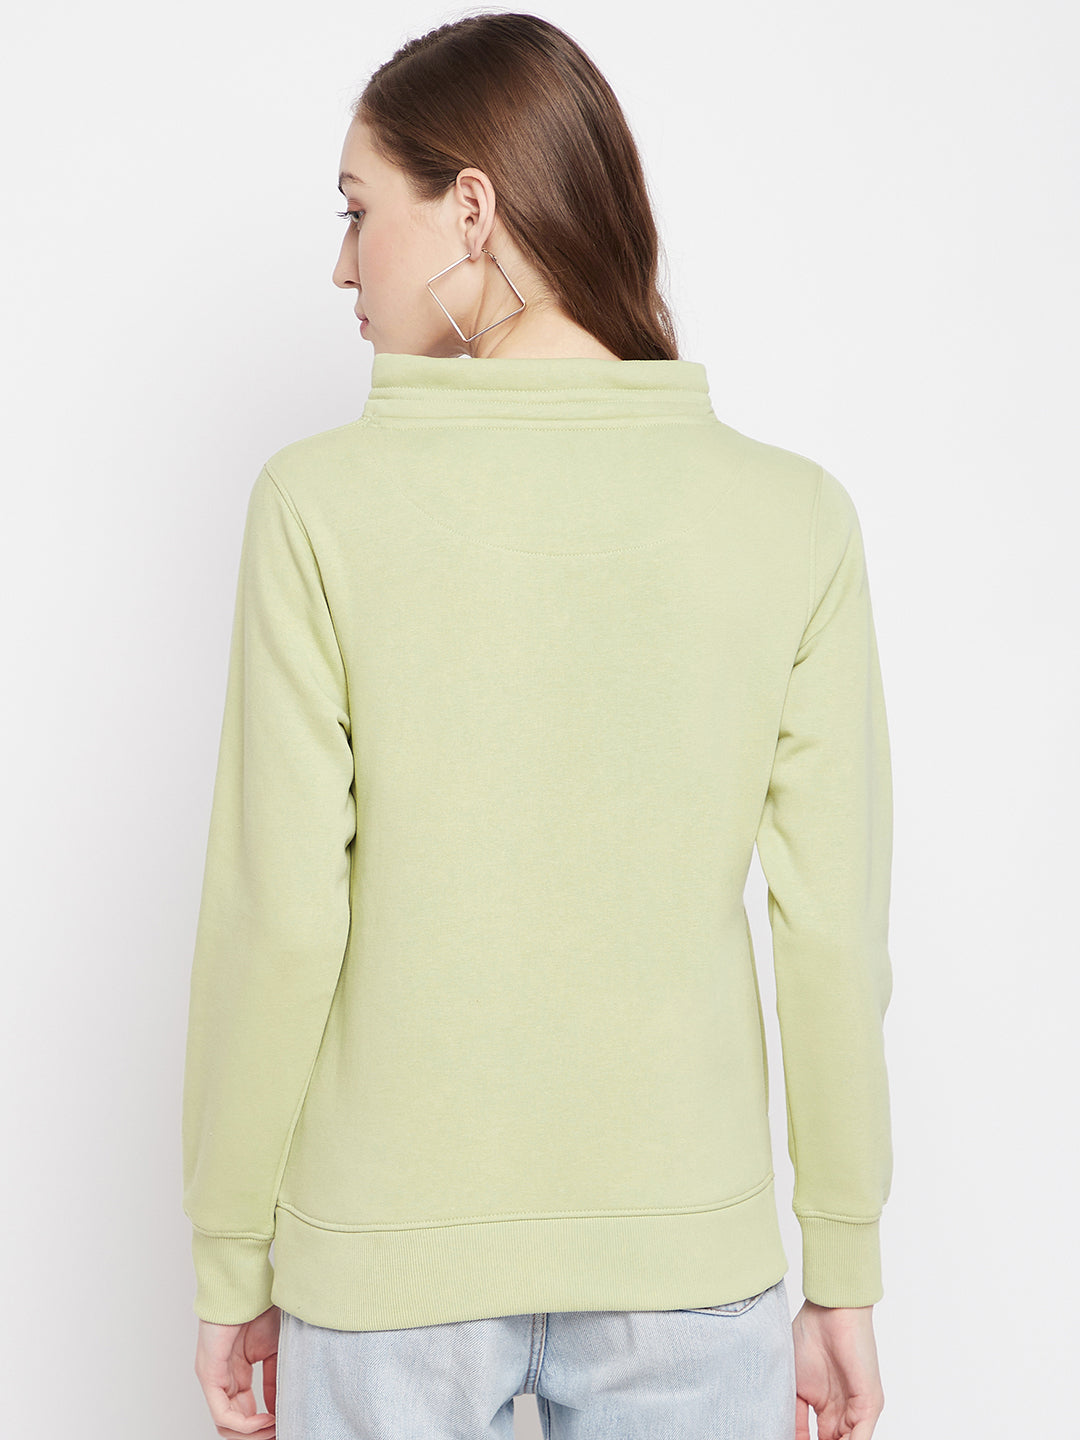 Olive Printed Turtle Neck Sweatshirt - Women Sweatshirts